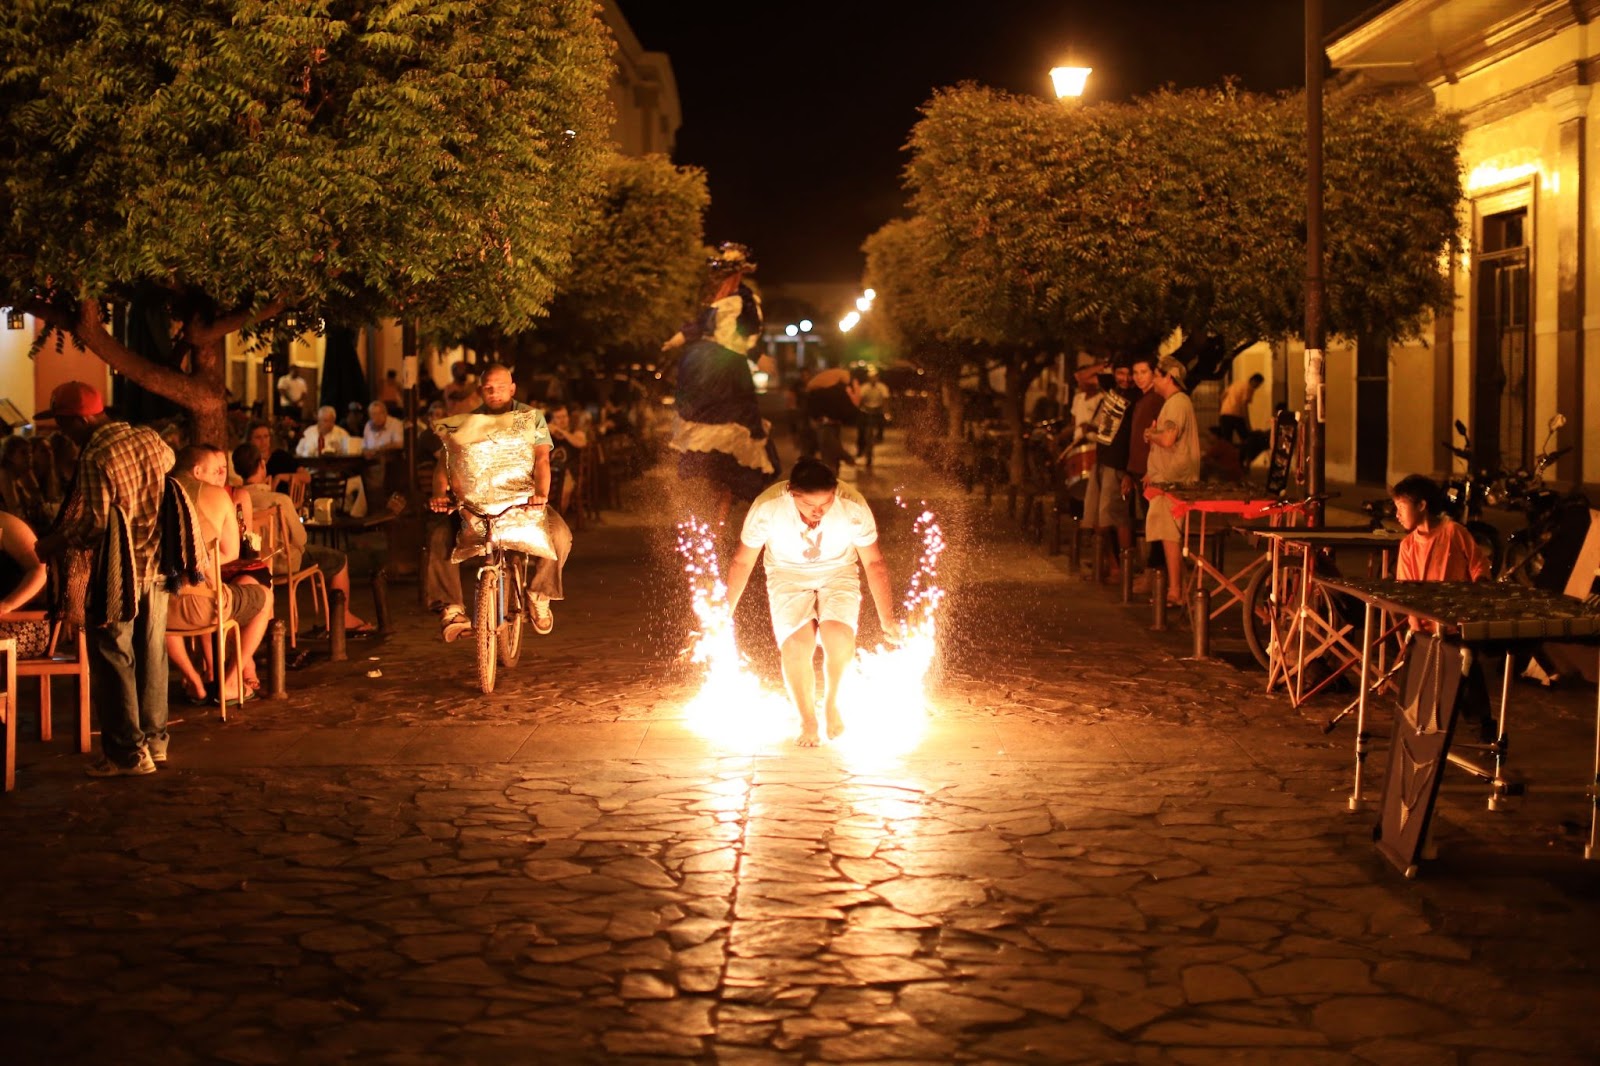 Street performer on Calle La Calzada in Granada, Nicaragua